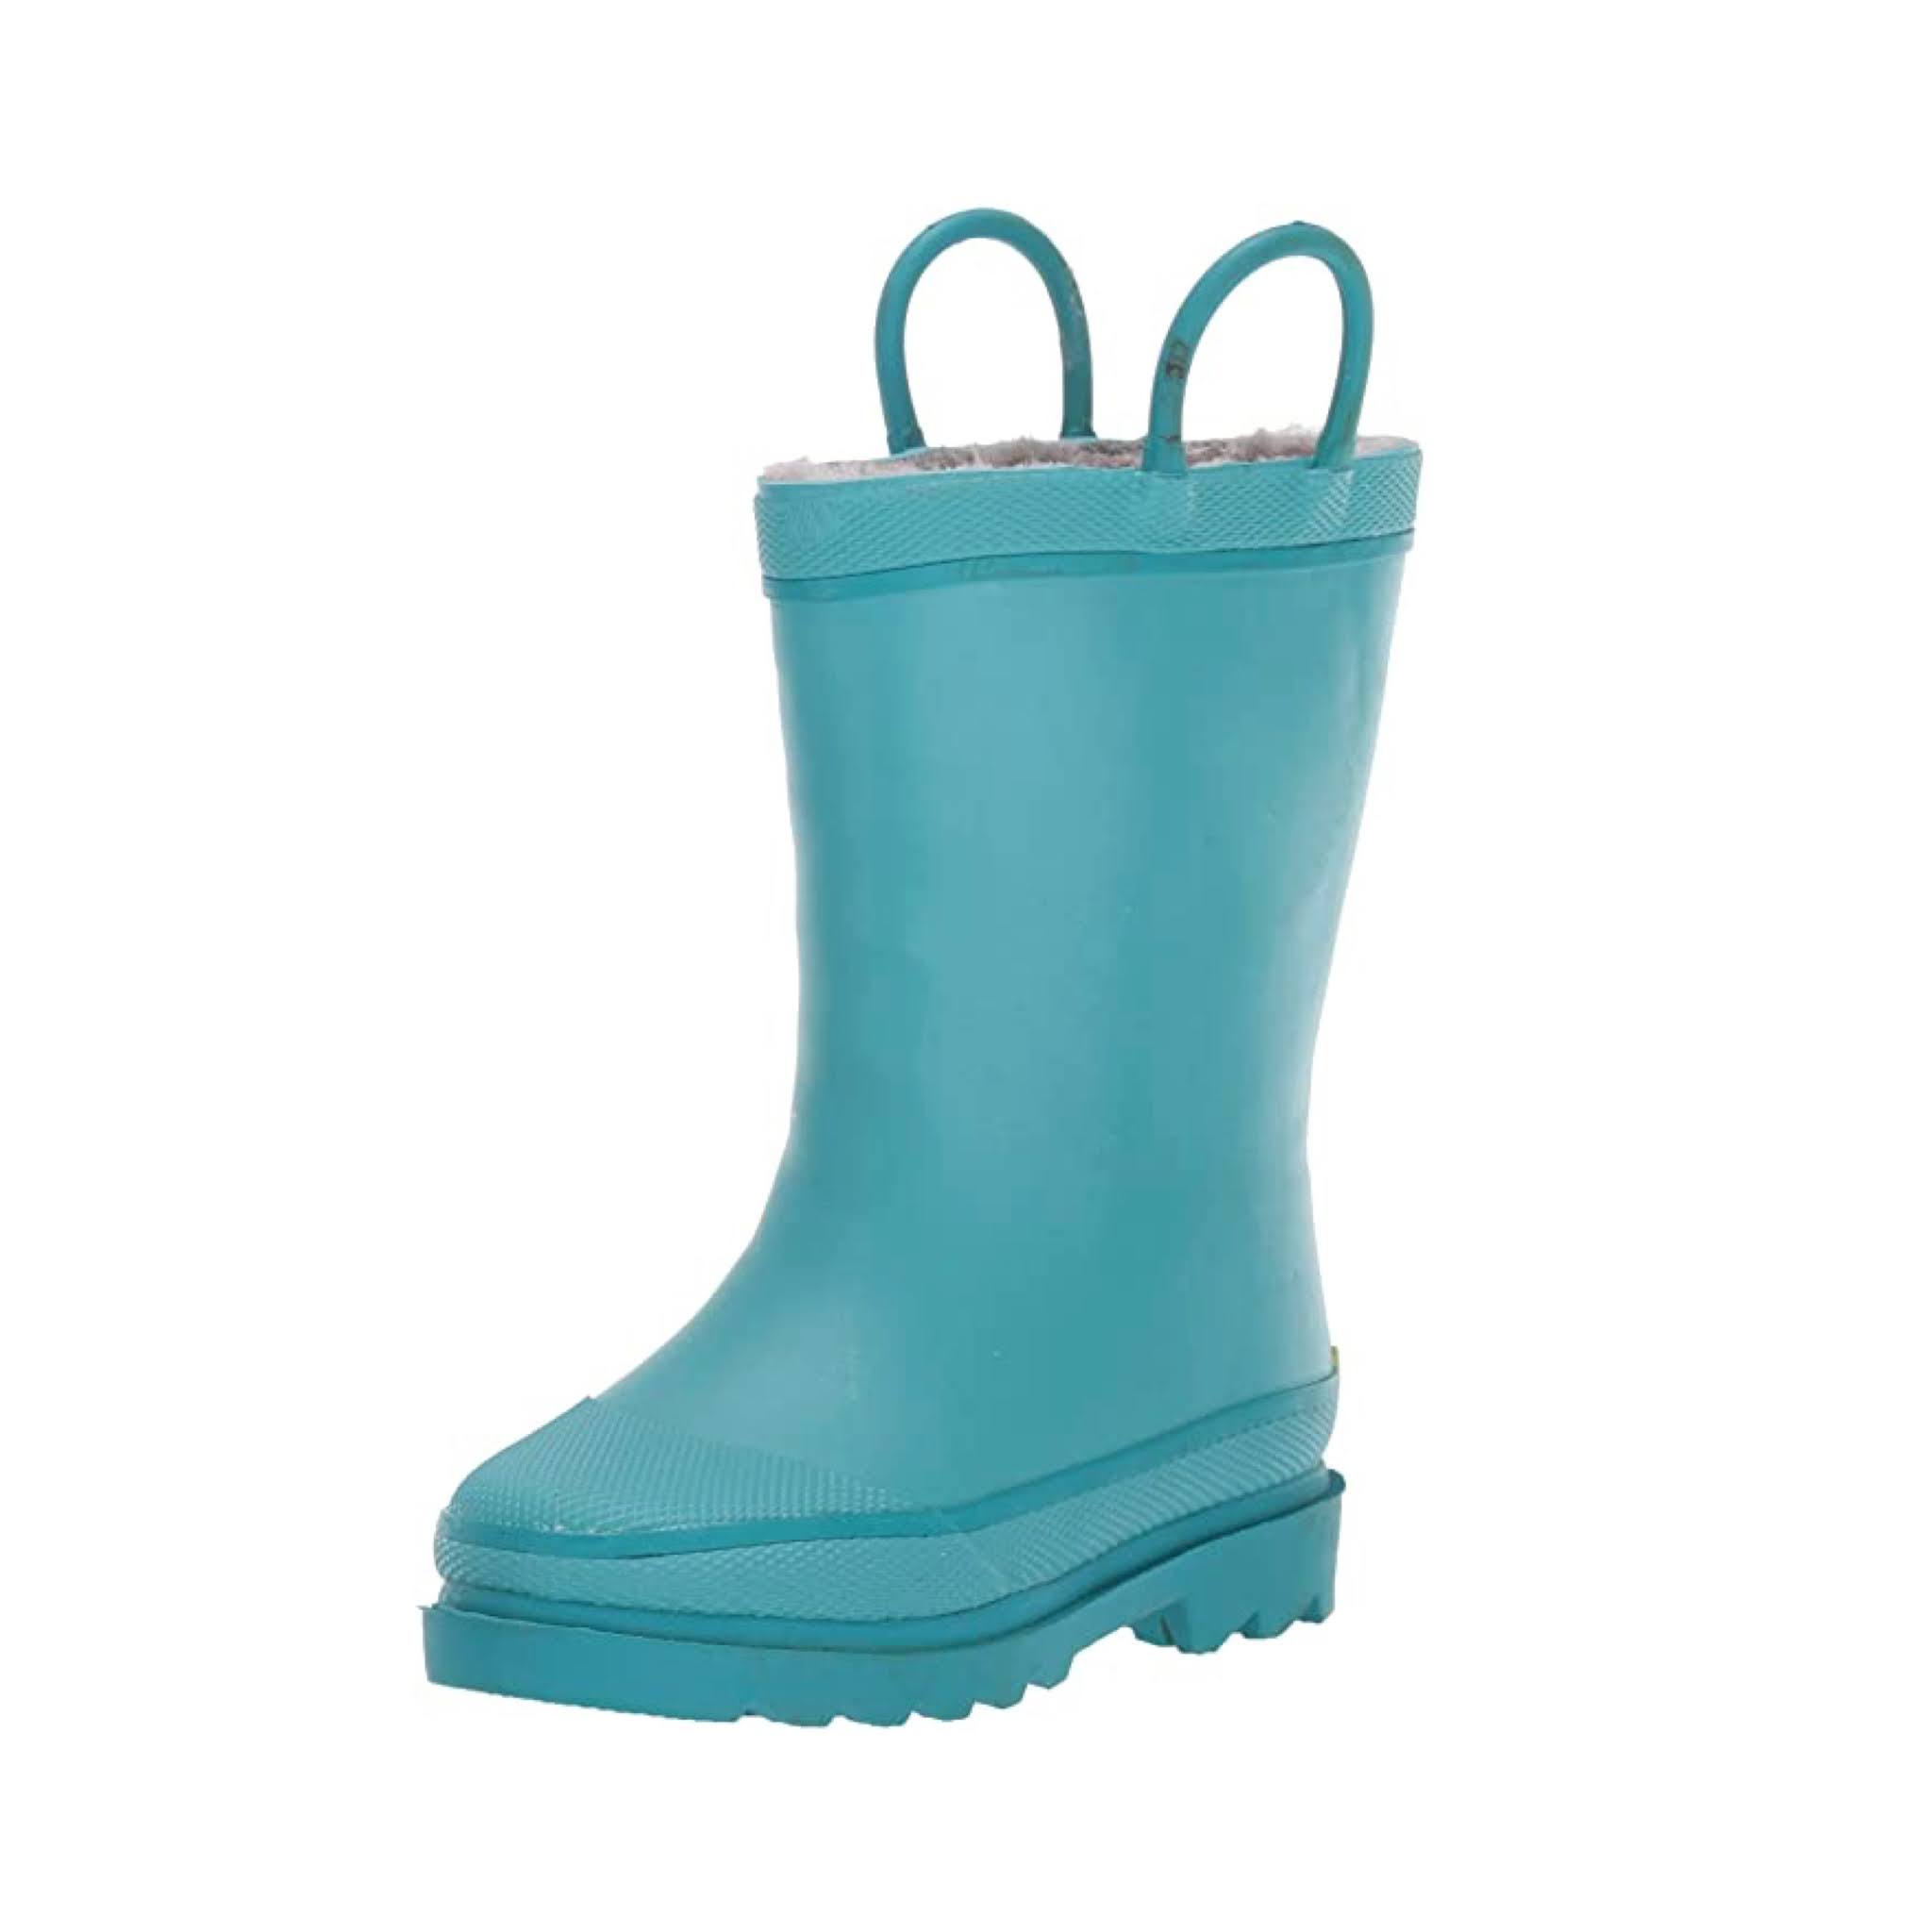 Kids Teal Rain Boots from Amazon